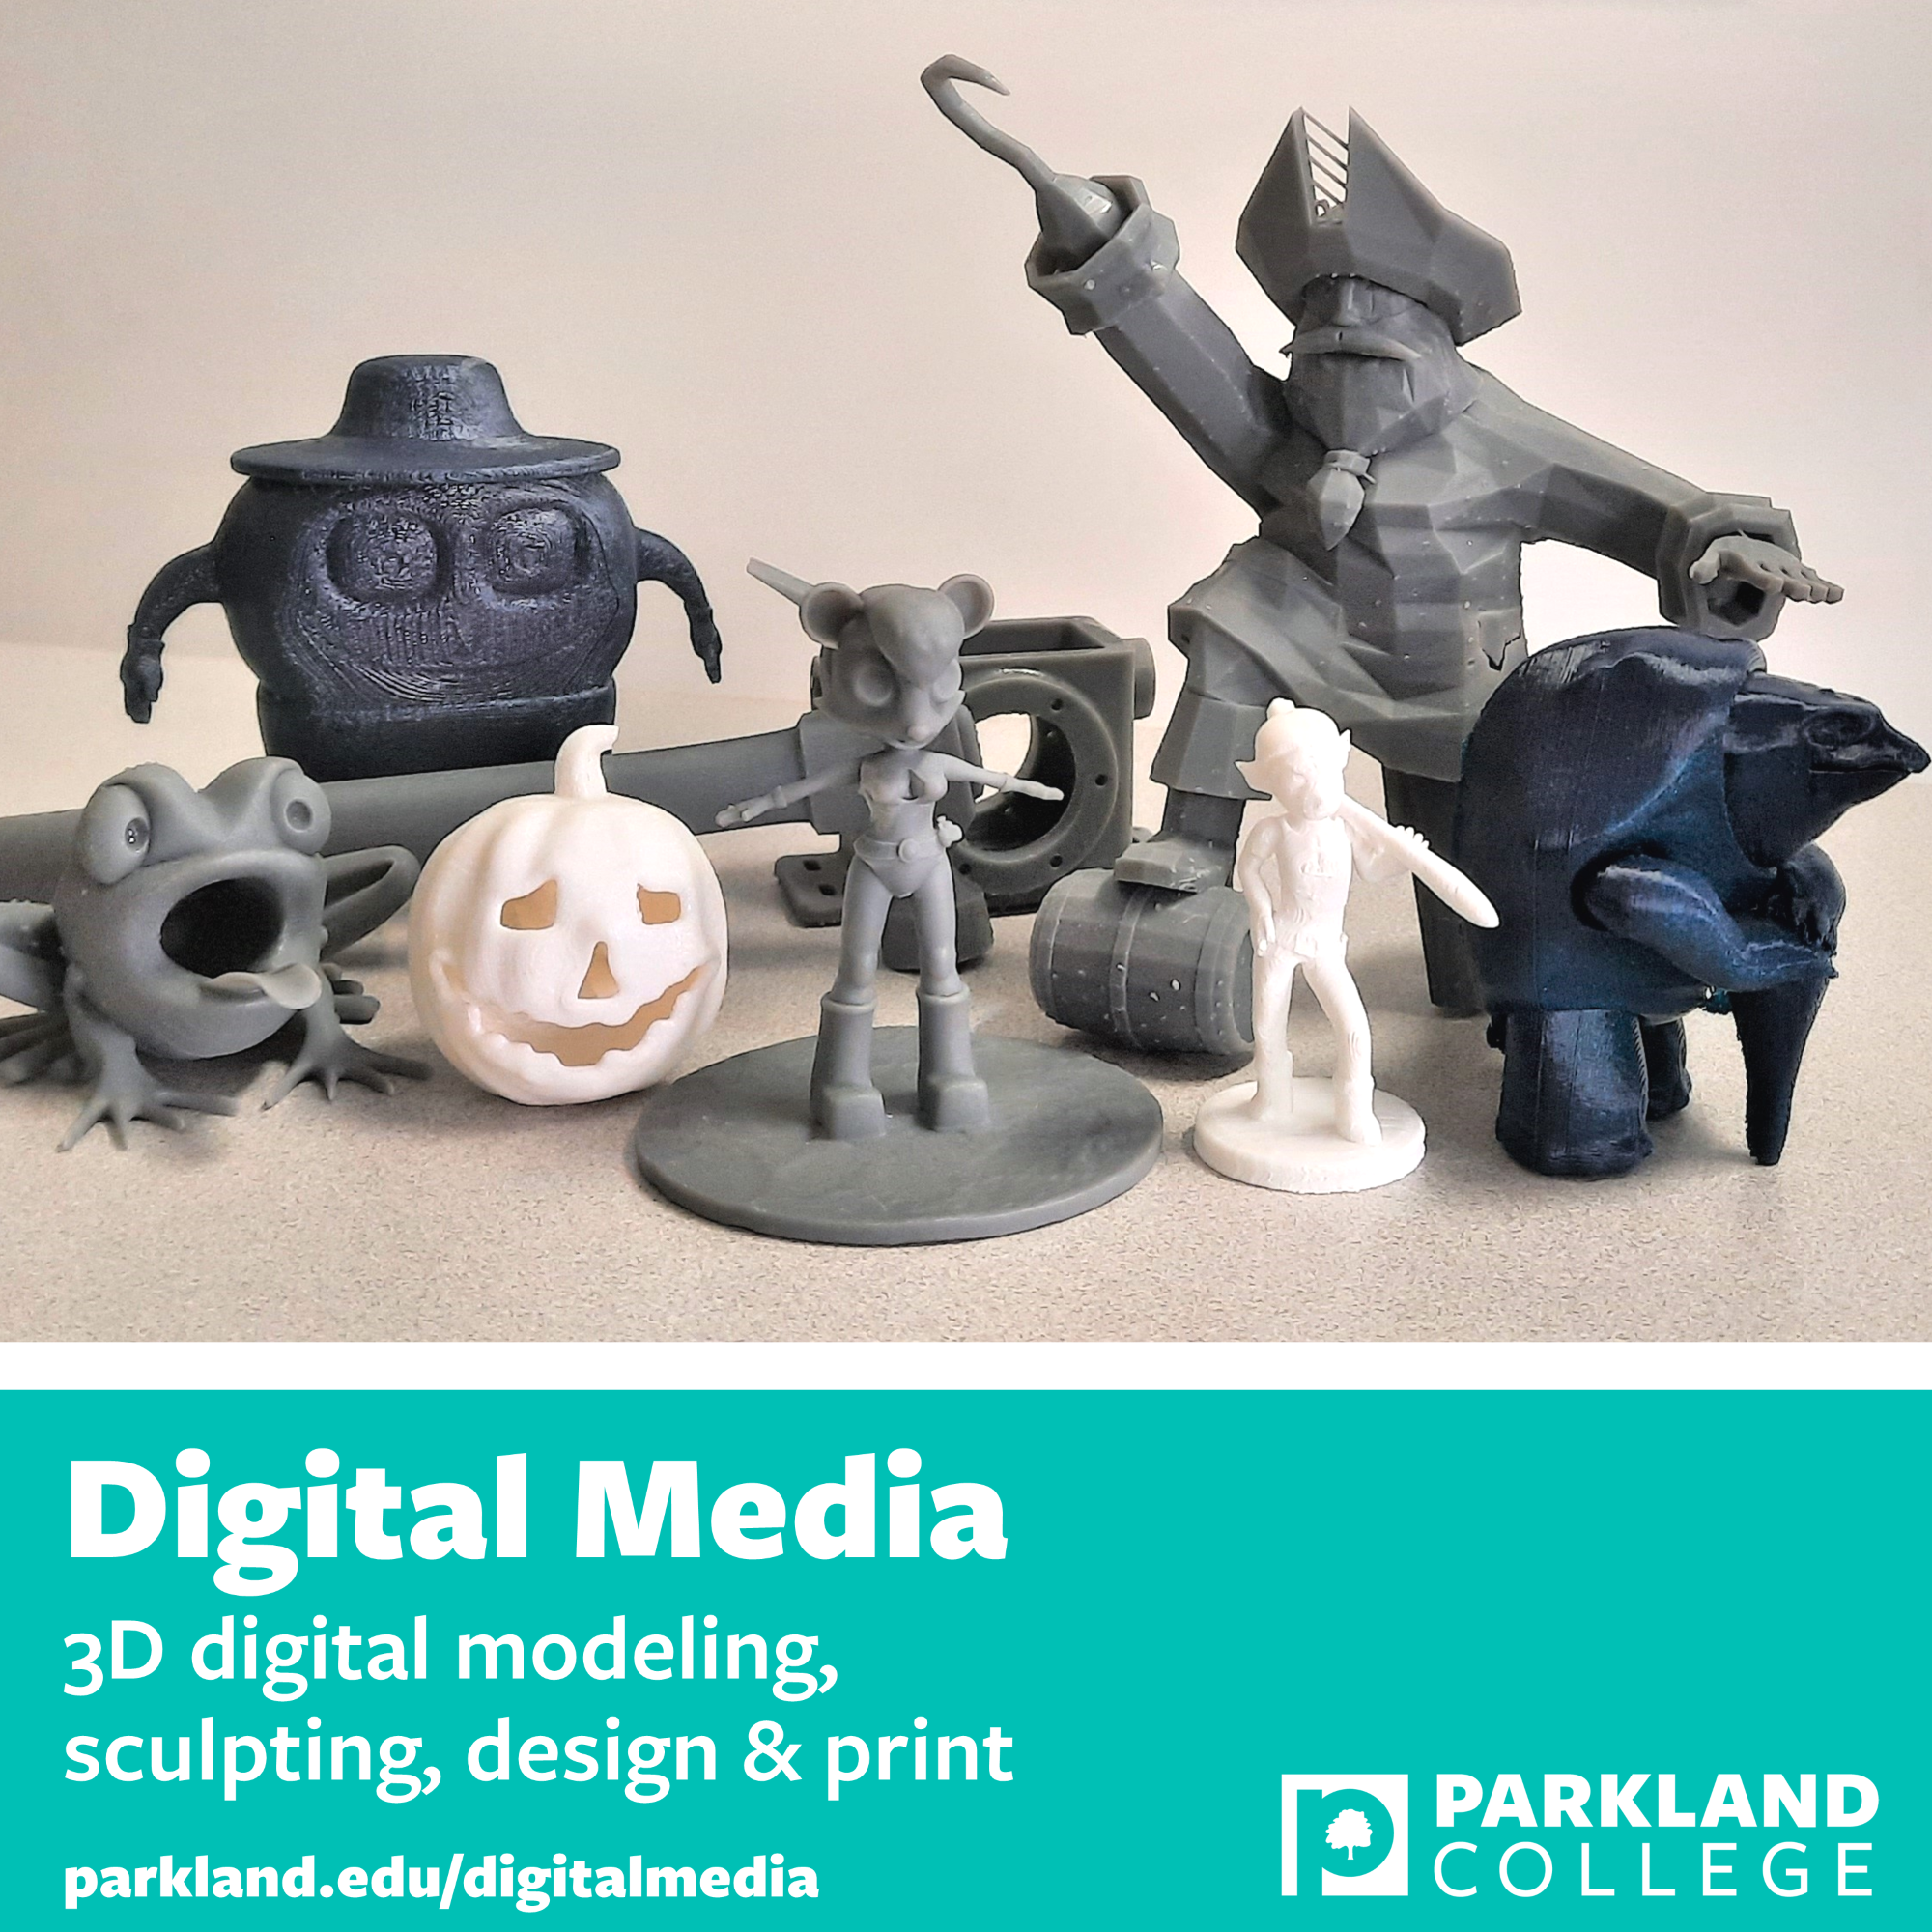 3D printed figures with the words "Digital Media - 3D digital modeling, sculpting, design & print"